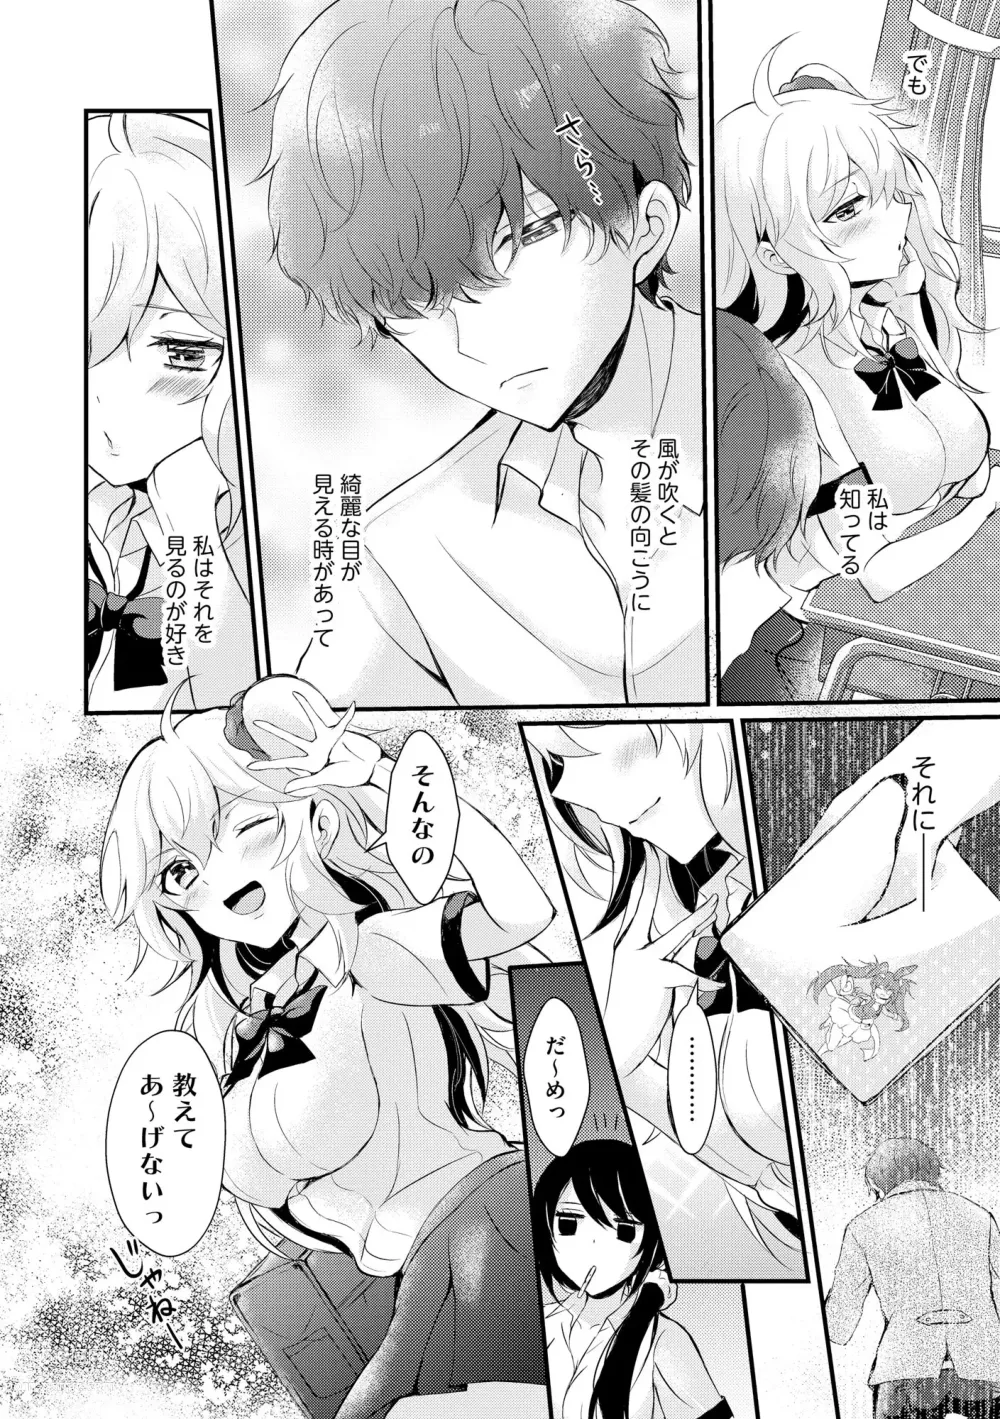 Page 8 of manga Choro Cos!